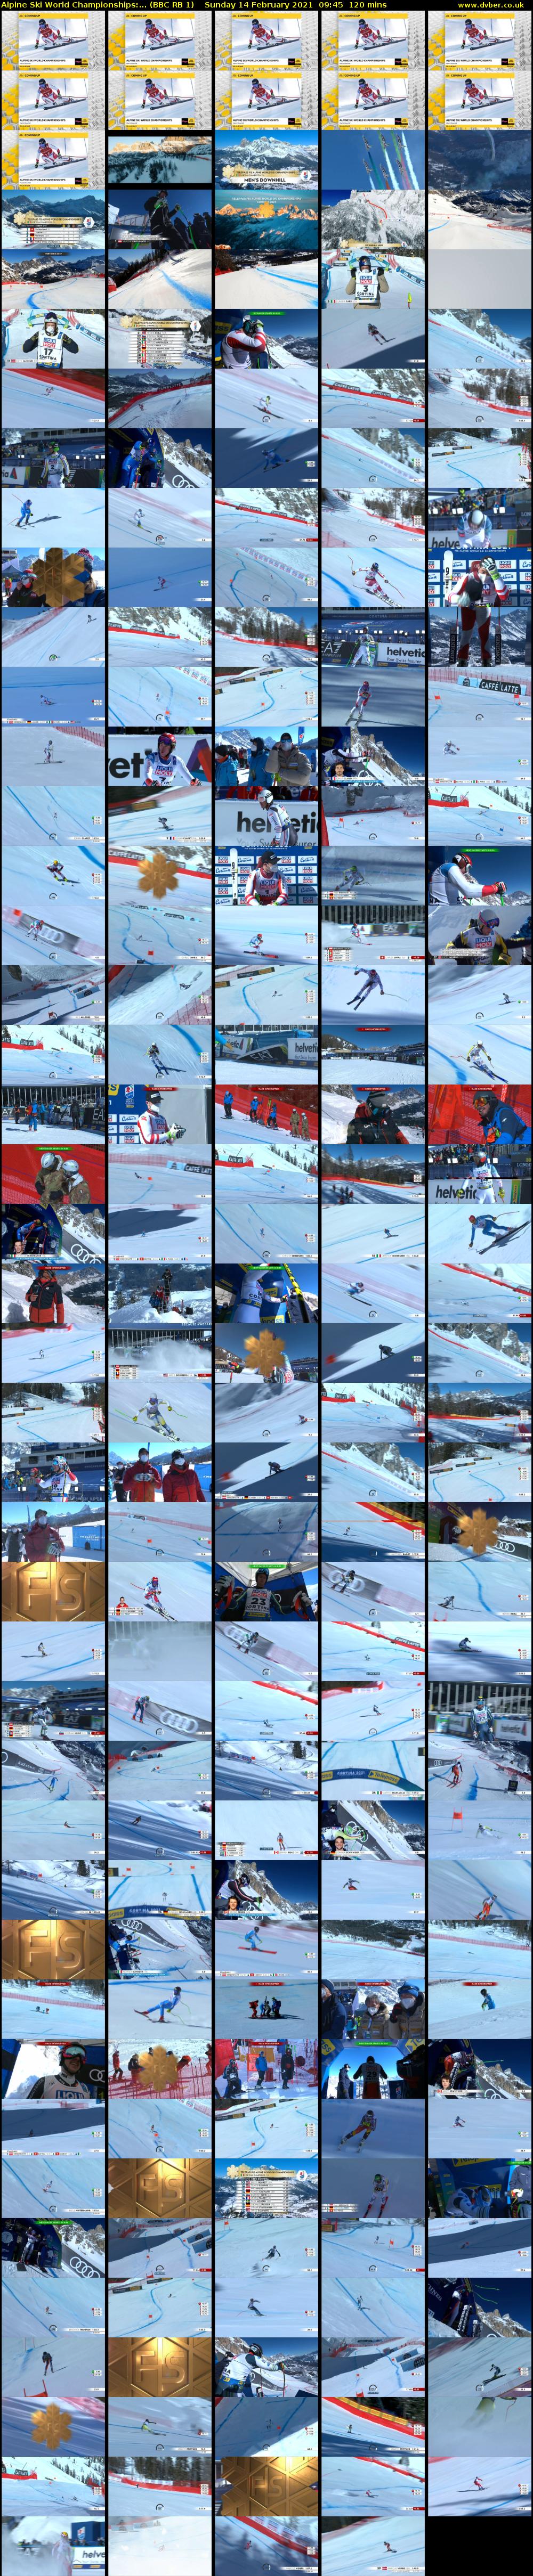 Alpine Ski World Championships:... (BBC RB 1) Sunday 14 February 2021 09:45 - 11:45